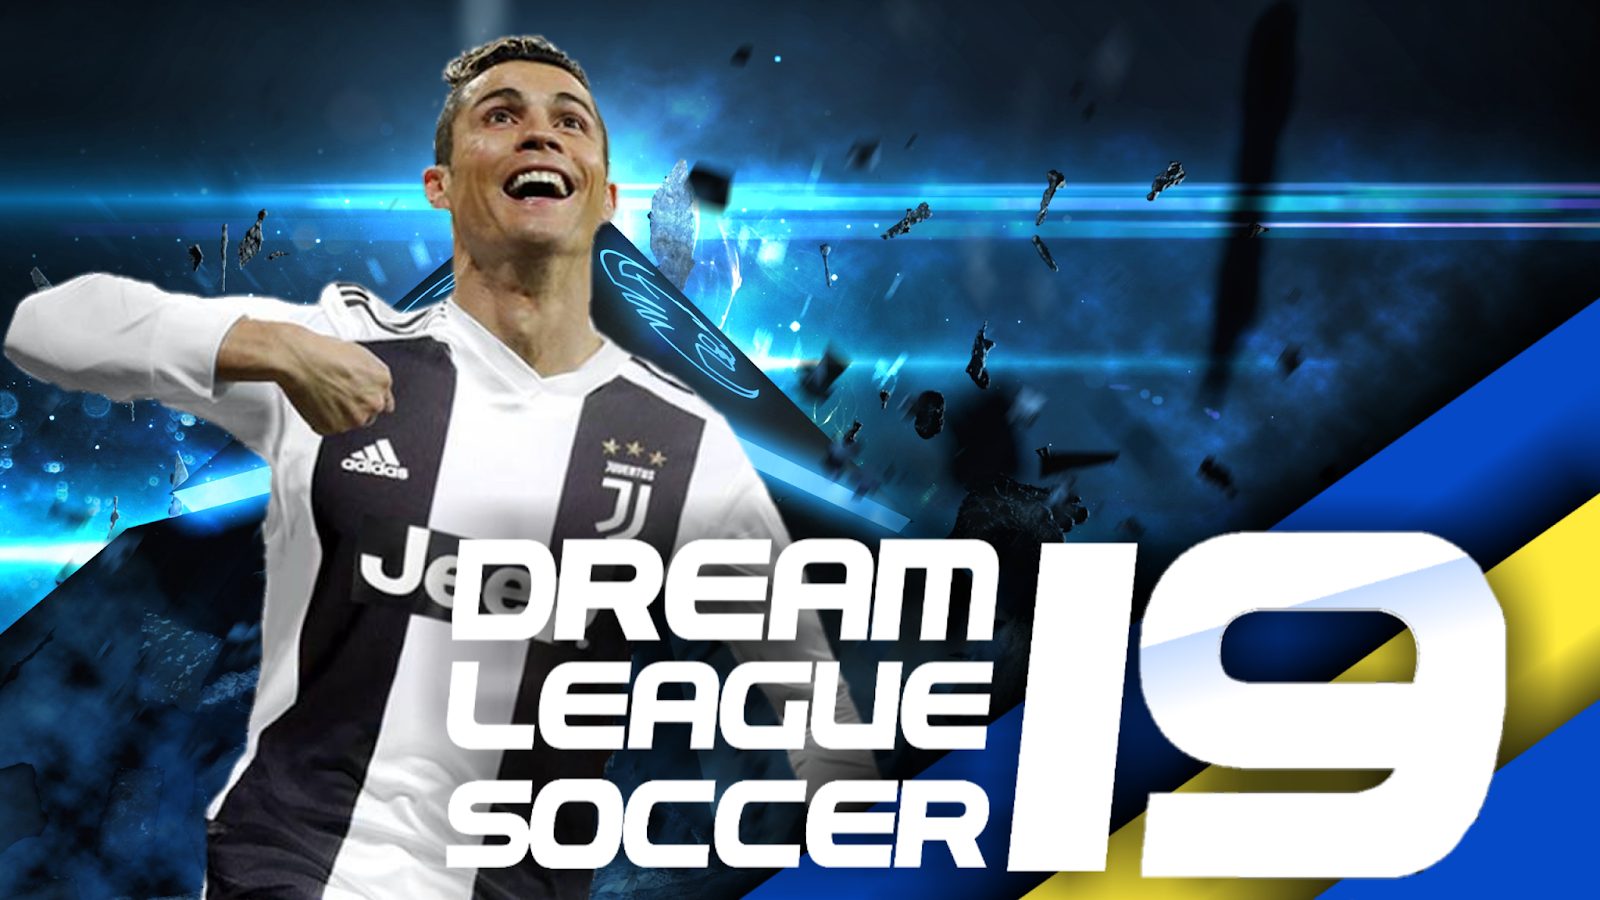 Dream league soccer 2019 apk